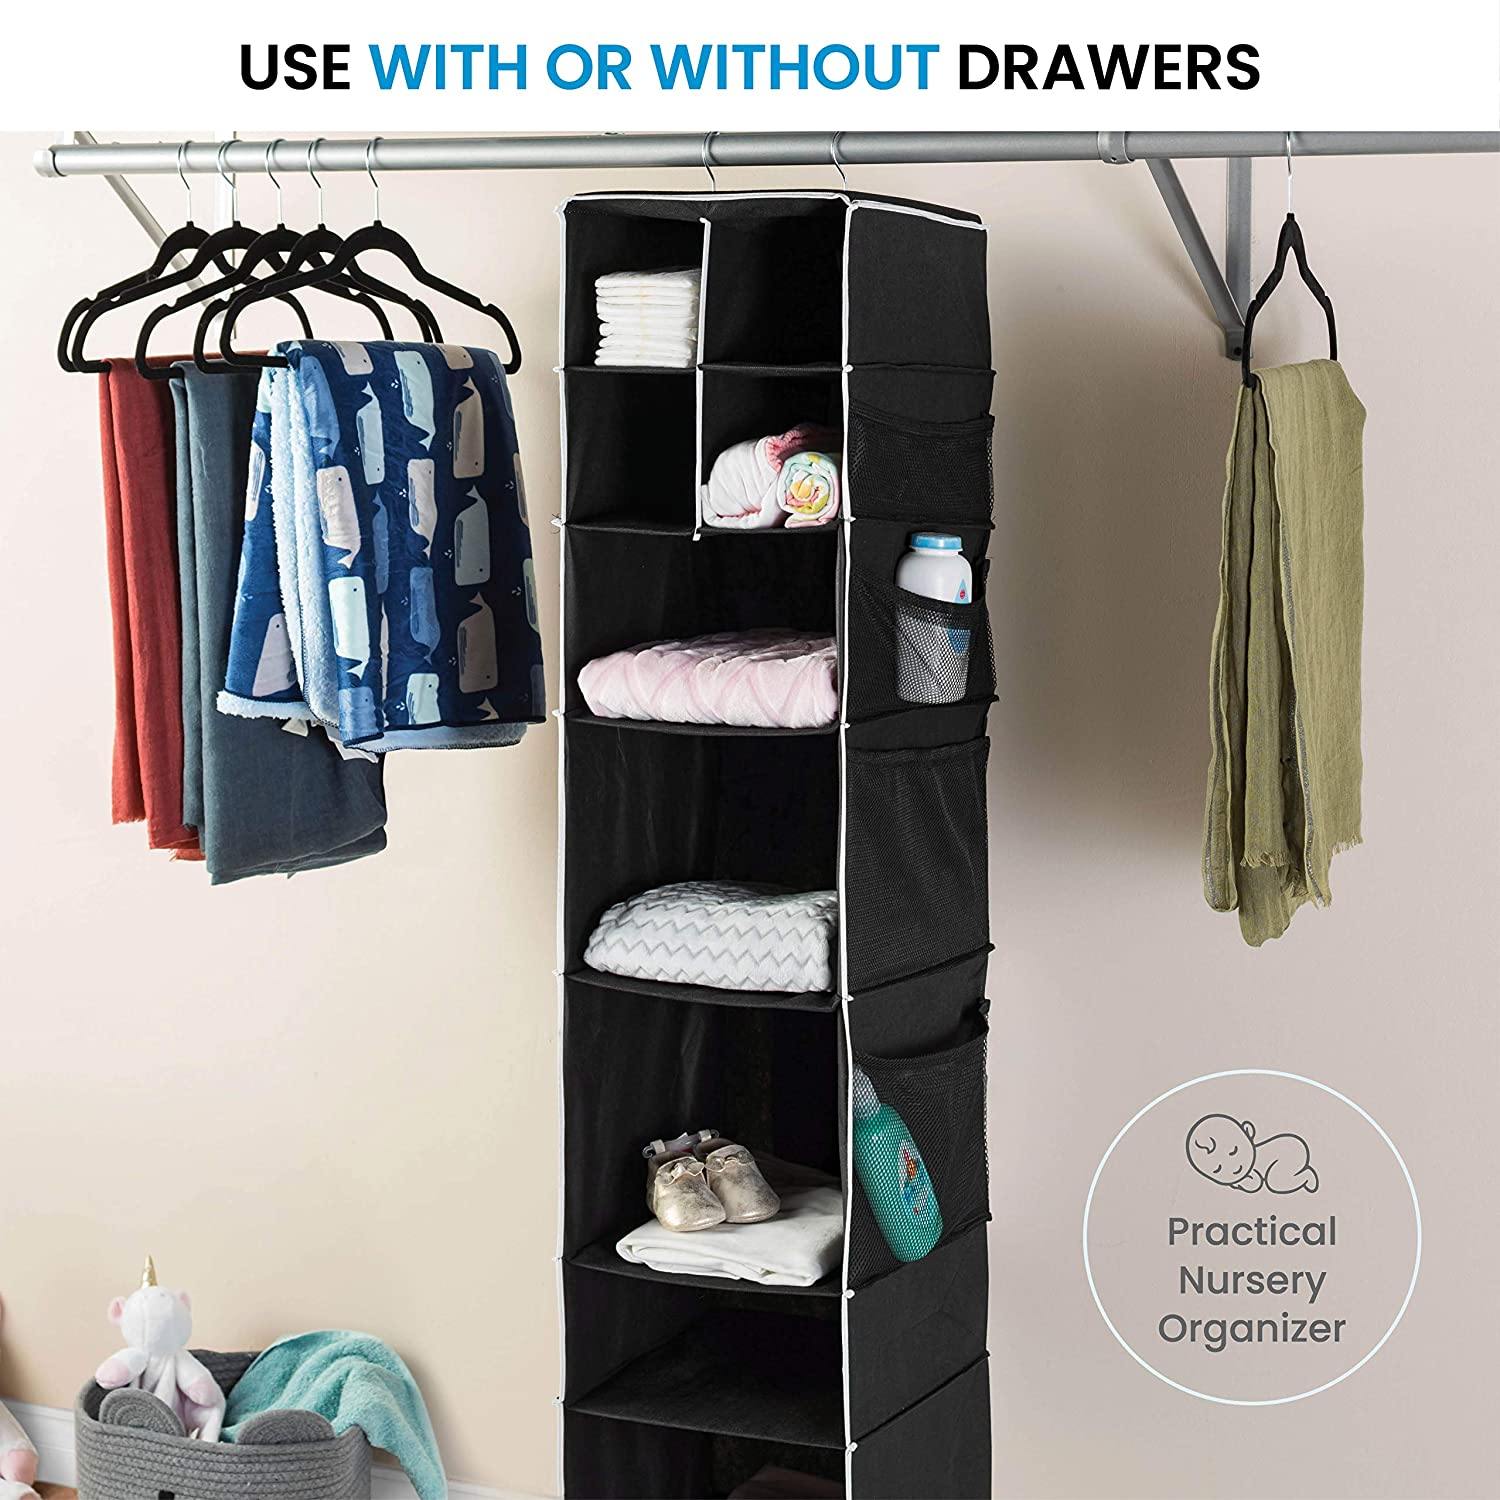 Shelves For Bags Design Ideas